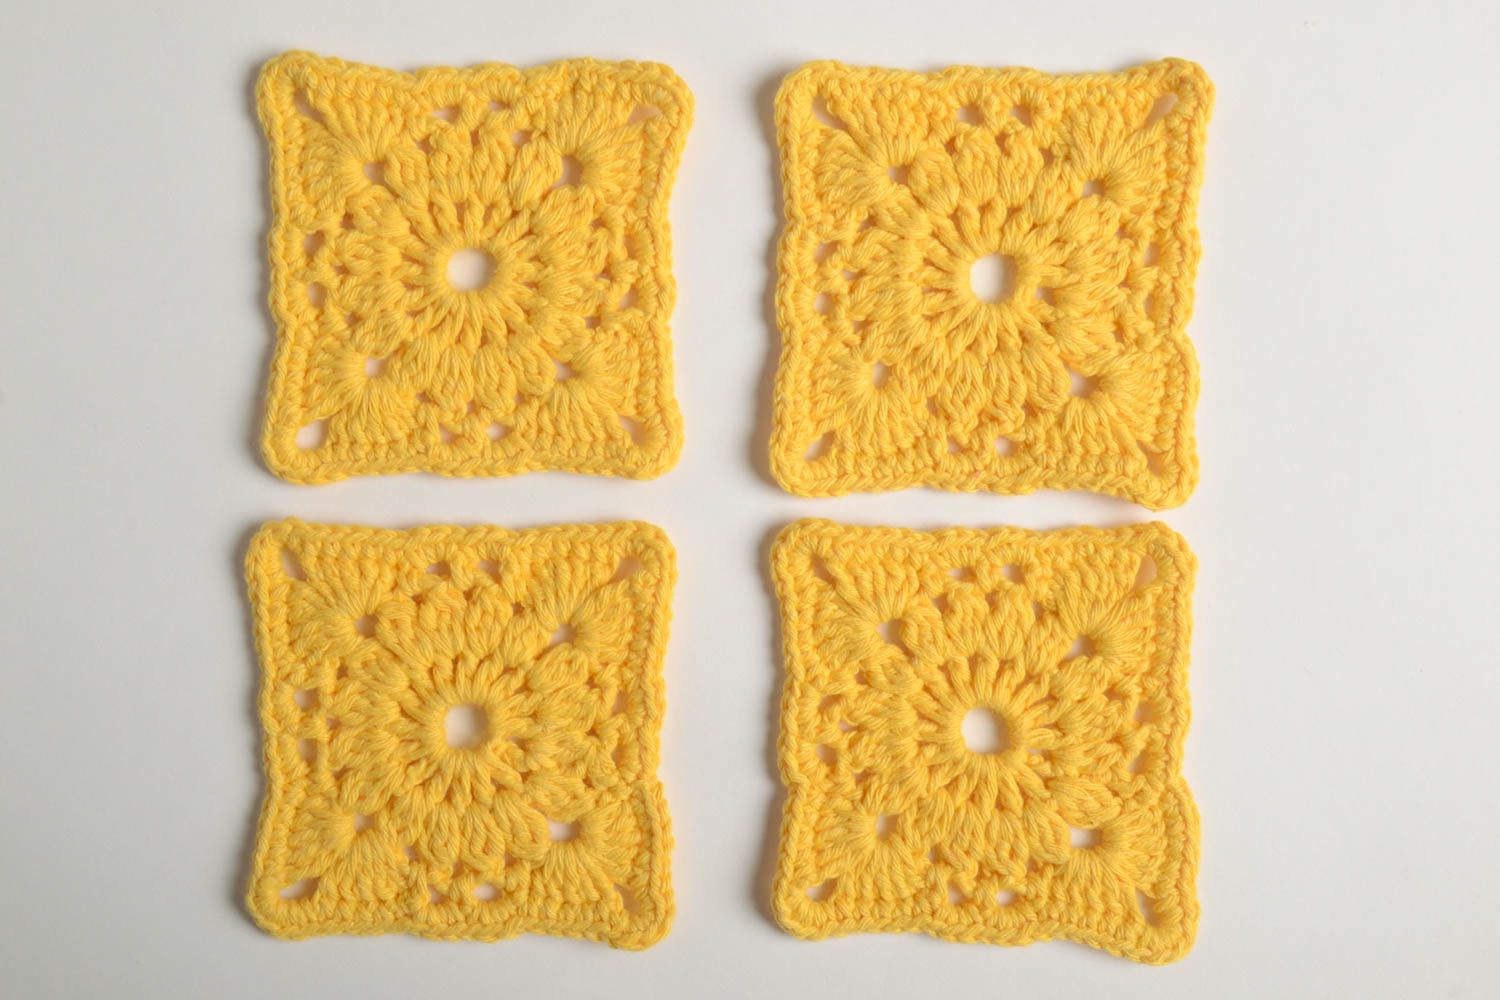 Unusual handmade crochet coaster hot pads table decor ideas small gifts photo 2